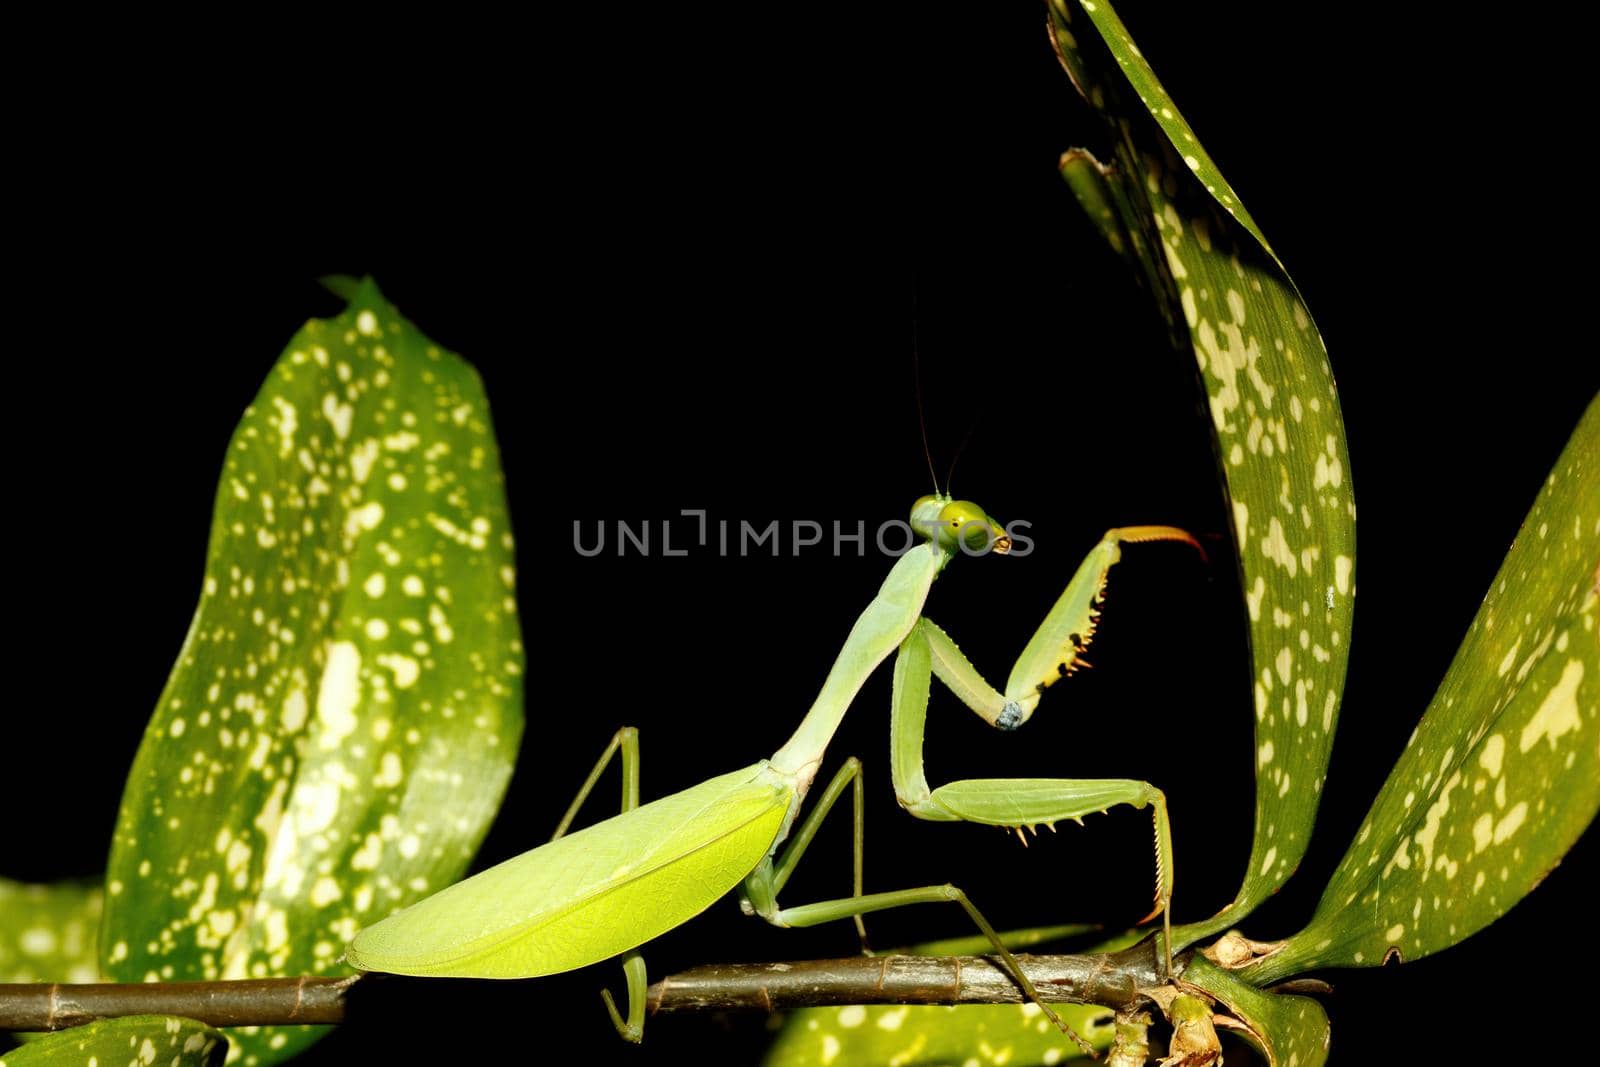 praying mantis on leaf, Sulawesi, Indonesia by artush